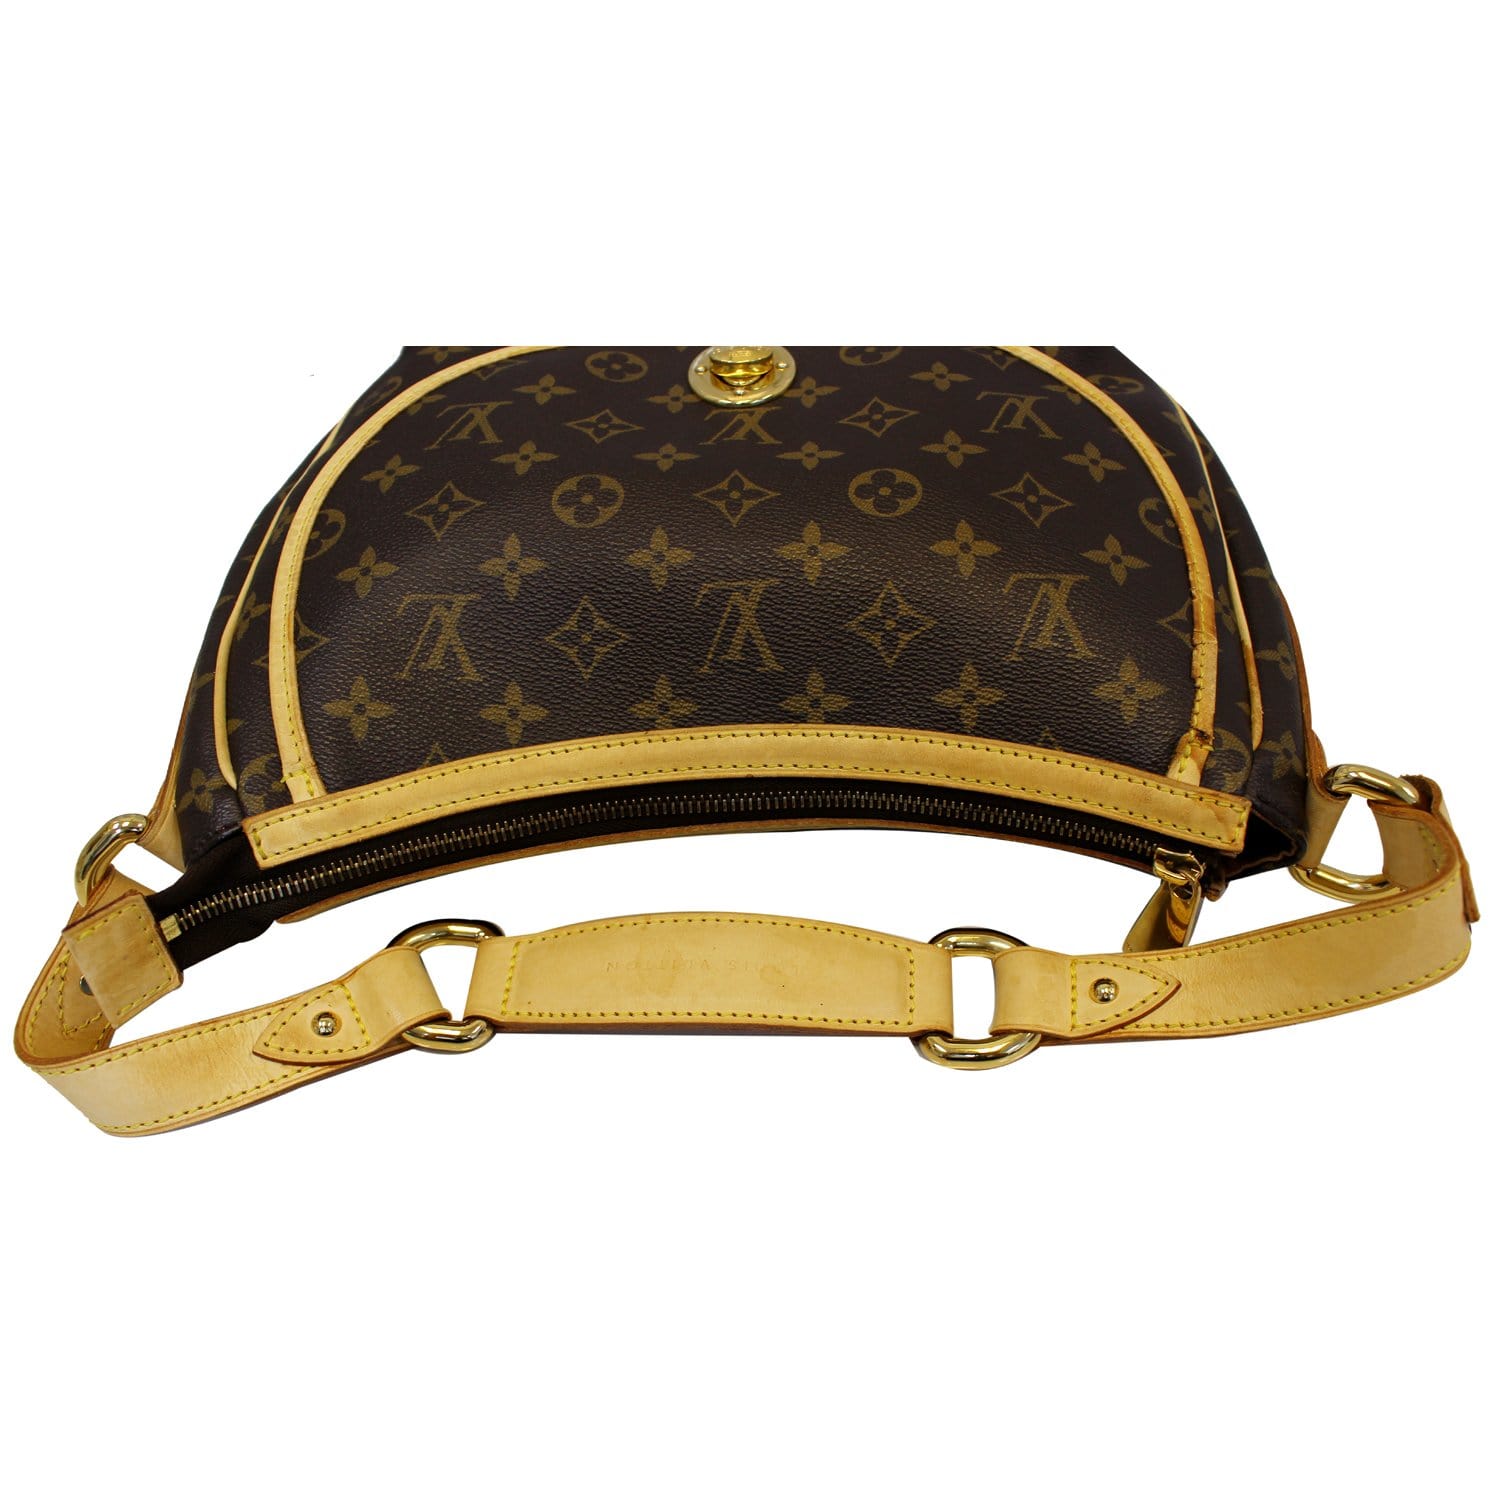 Tulum PM Handbag Luxury Designer By Louis Vuitton Size: Small